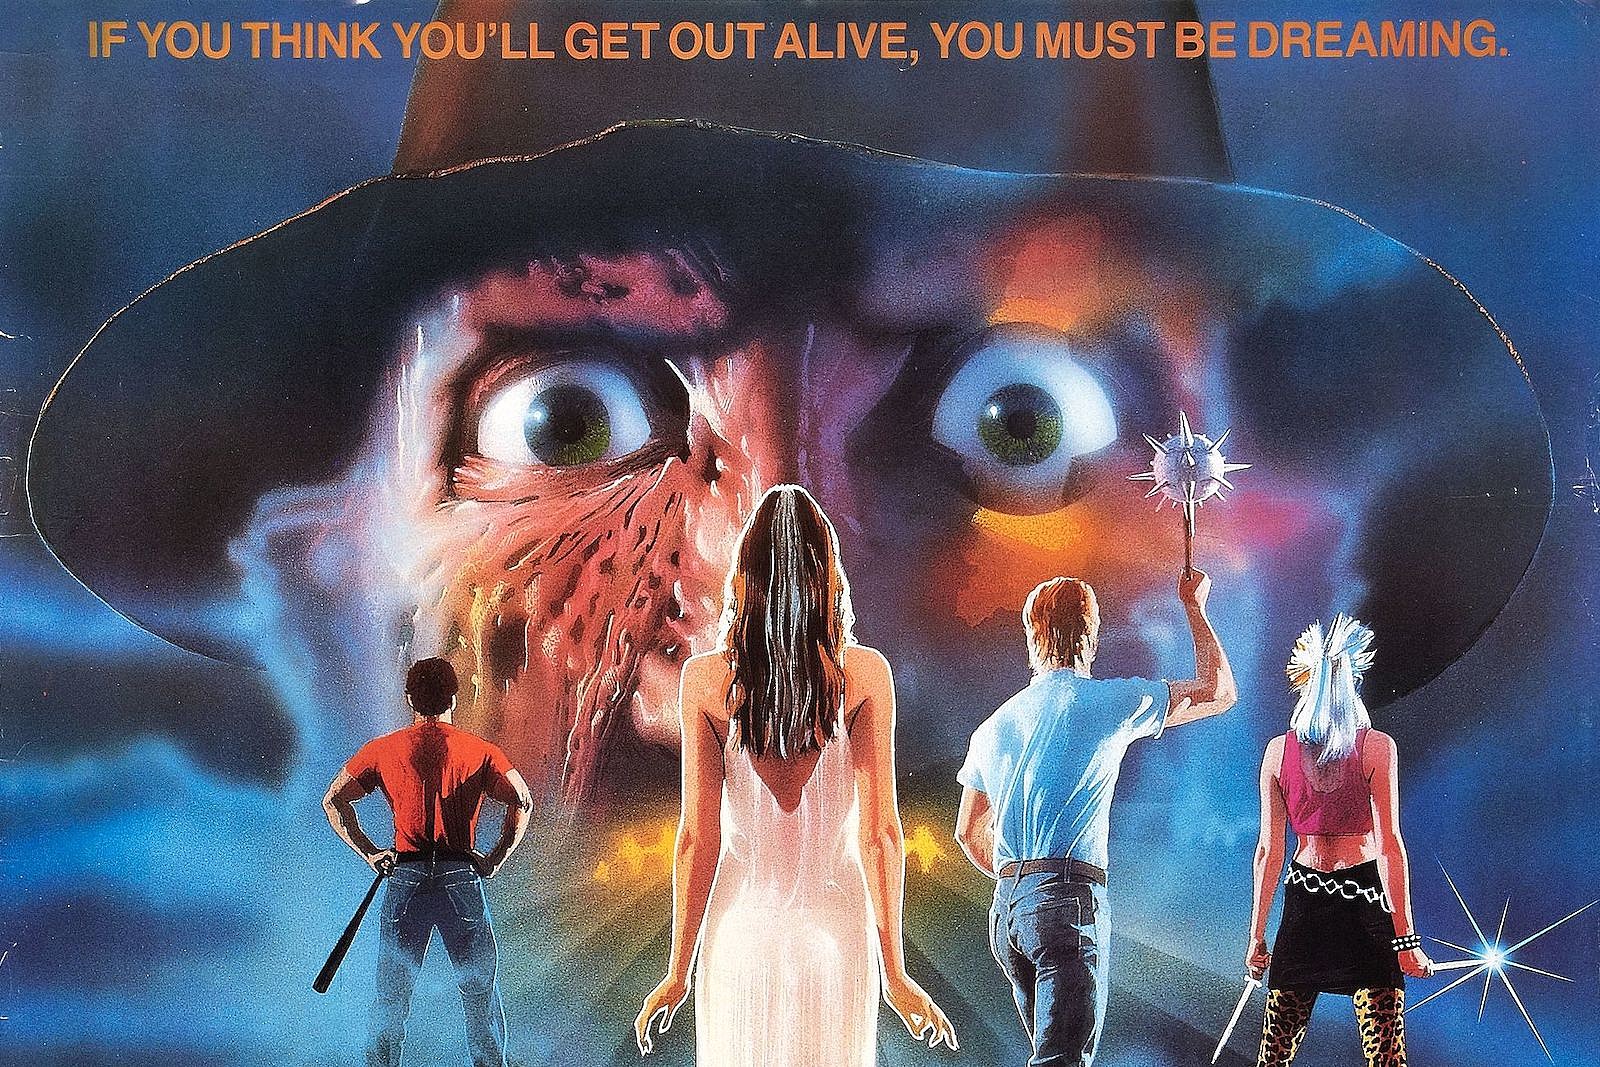 Armless Girl Fucked - 35 Years Ago: 'Dream Warriors' Reveals Freddy Krueger's Backstory